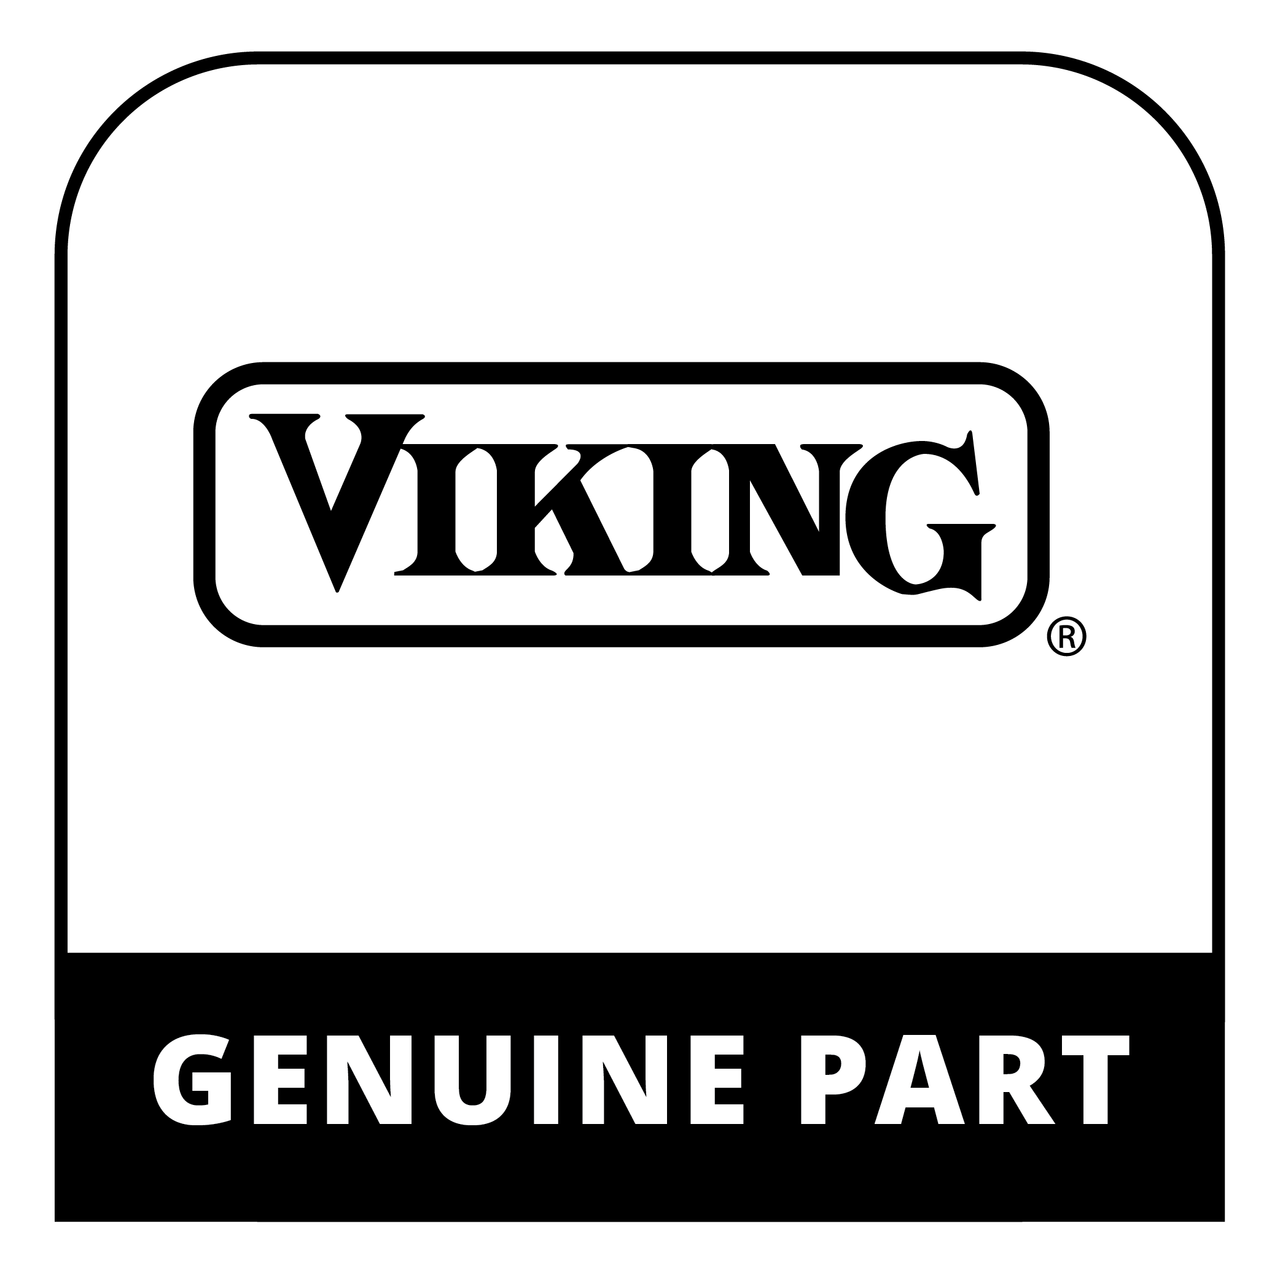 Viking A40613-021 - Assy, Door Foamed 42In - Genuine Viking Part